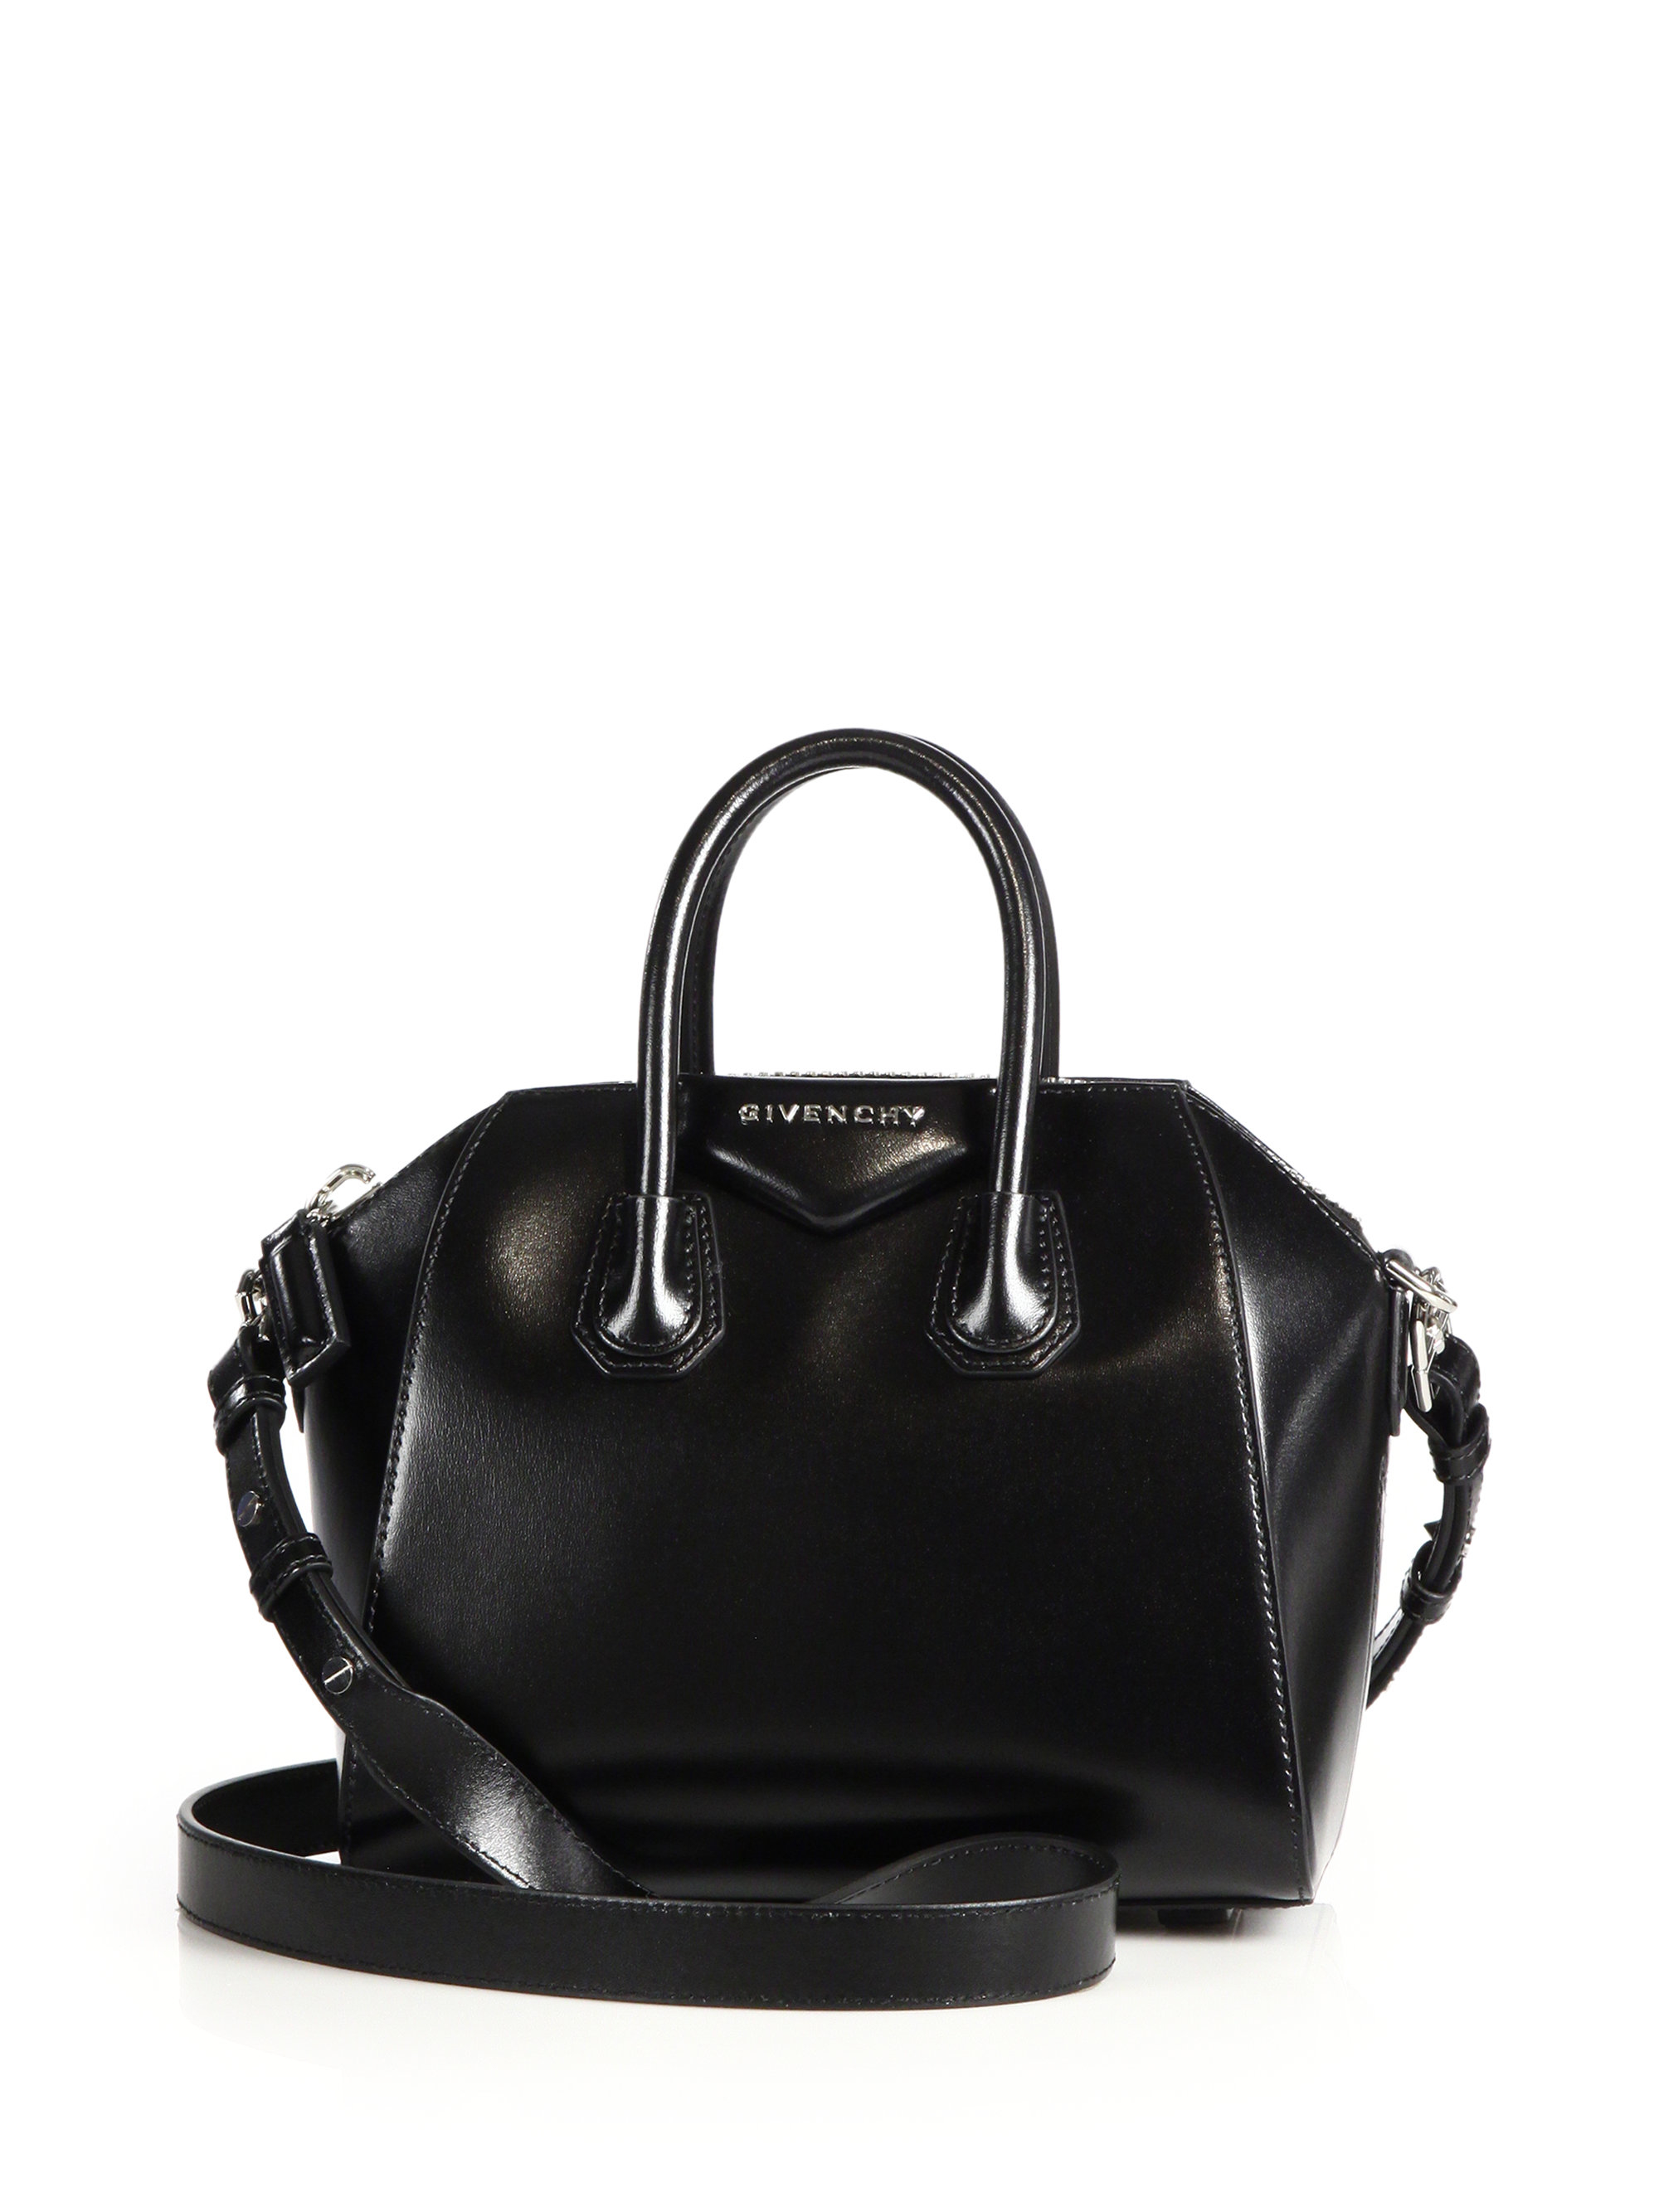 Givenchy Antigona Mini Leather Satchel in Black | Lyst